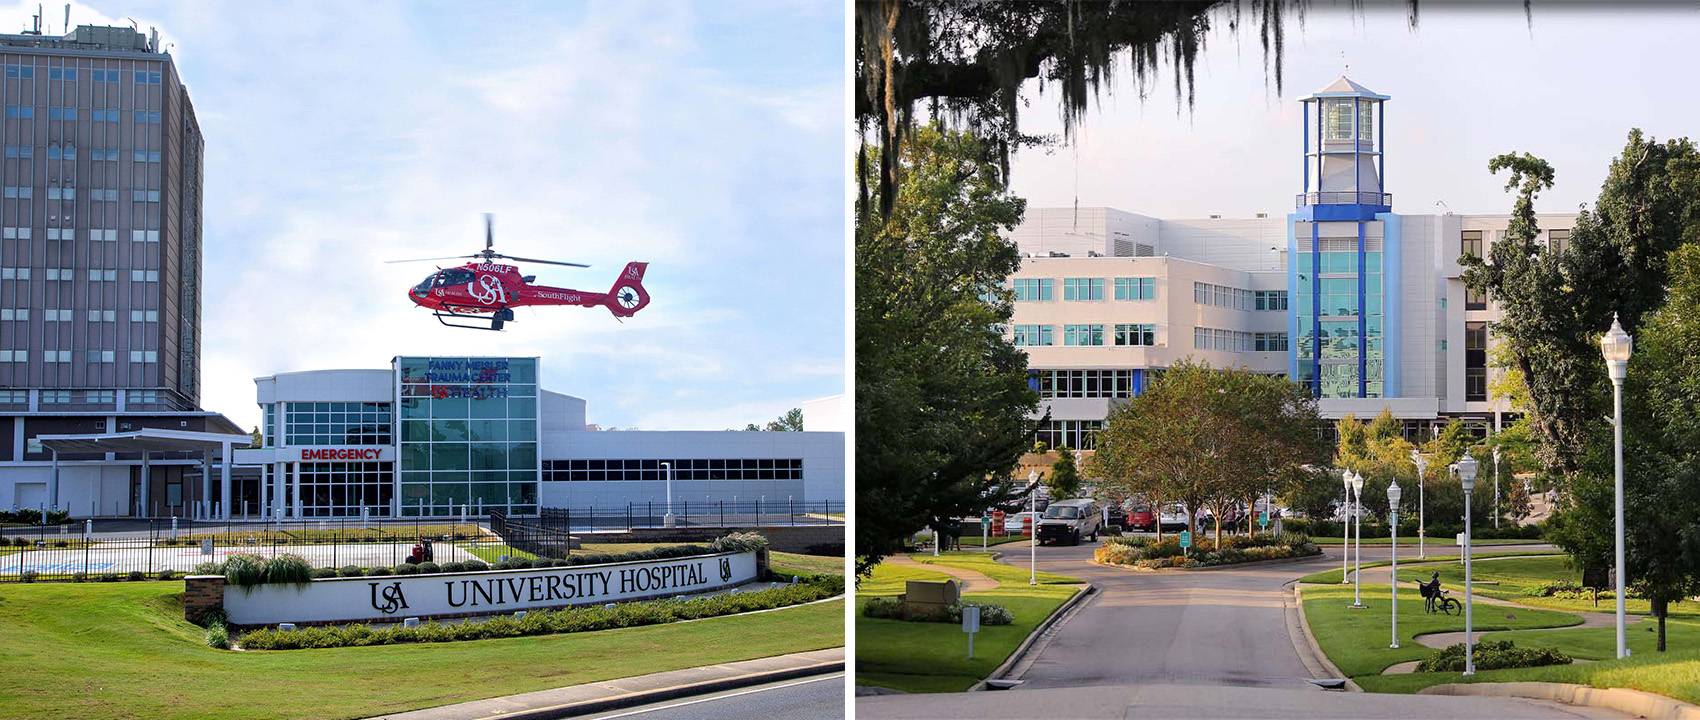 USA Health University Hospital and USA Health Children's & Women's Hospital